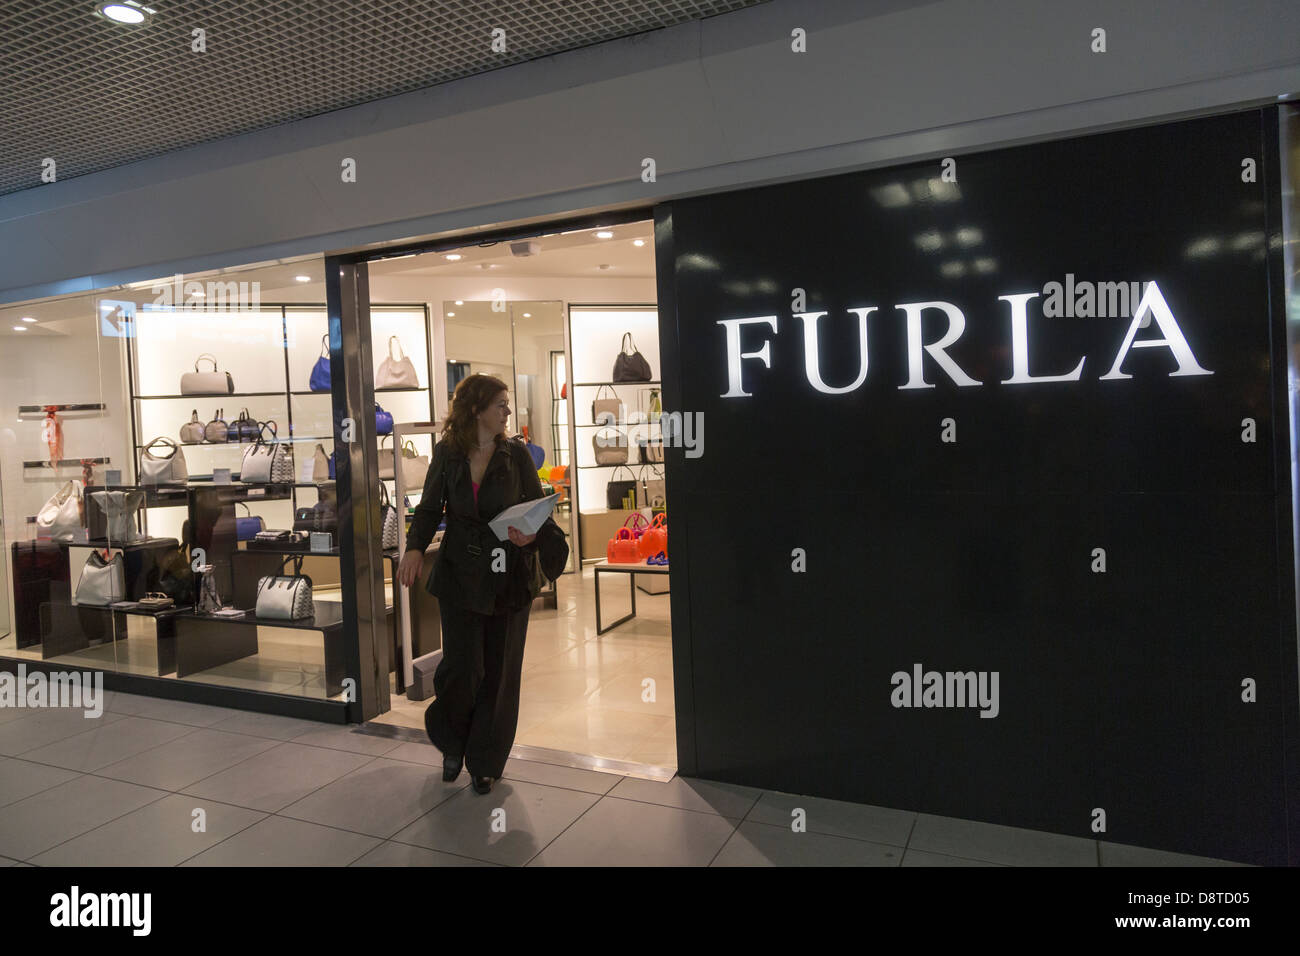 Furla shop Fiumicino Airport, Rome, Italy Stock Photo - Alamy